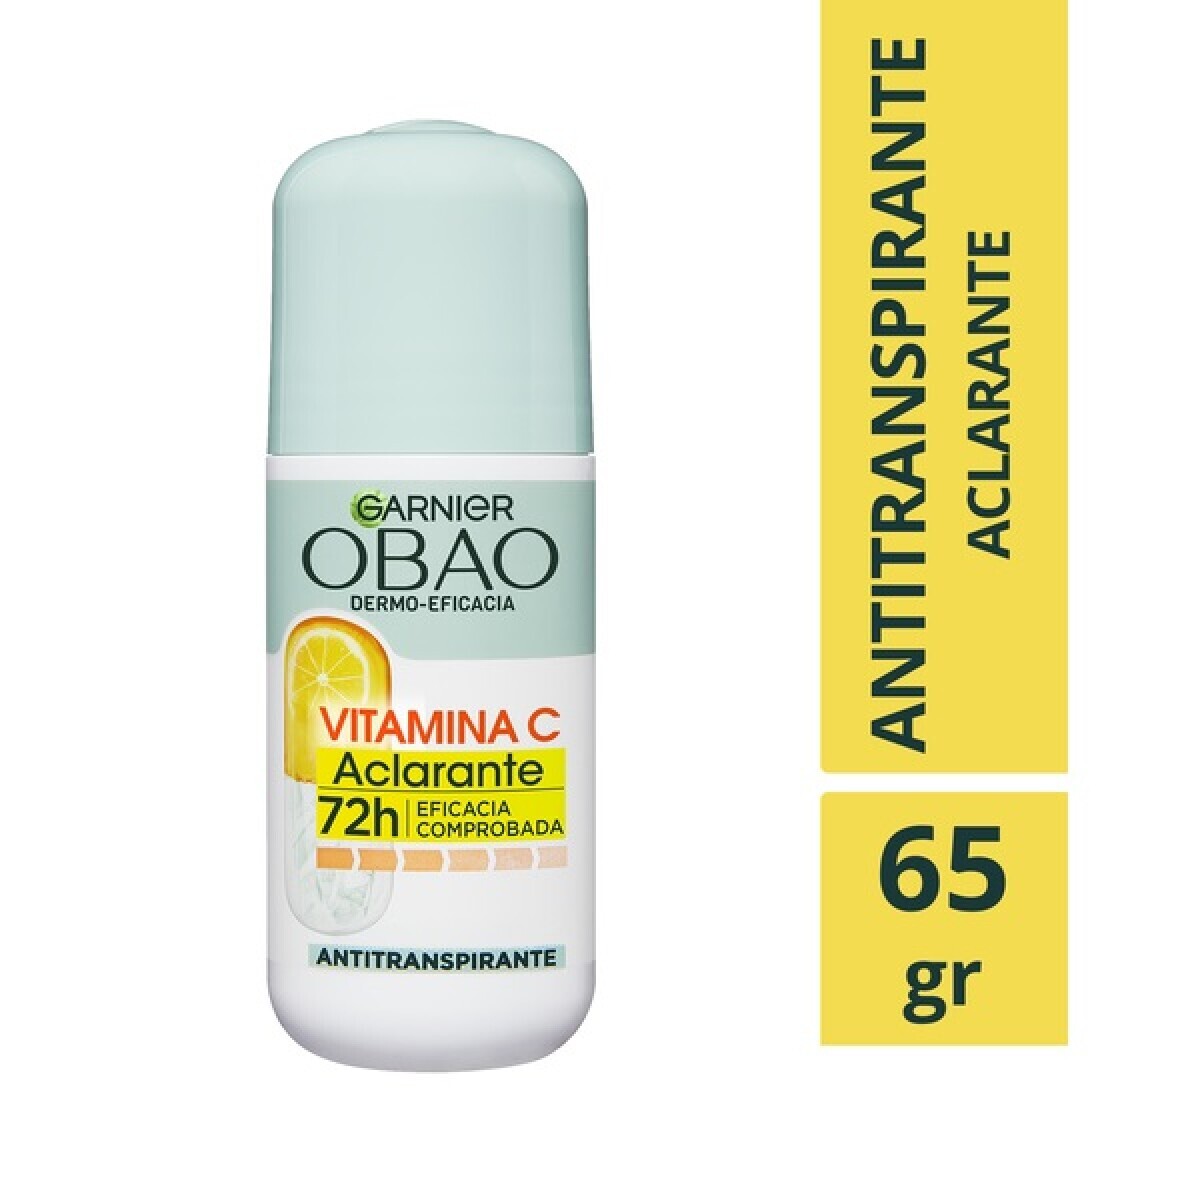 Desodorante Garnier O-bao dermo eficacia - Vitamina C roll on 